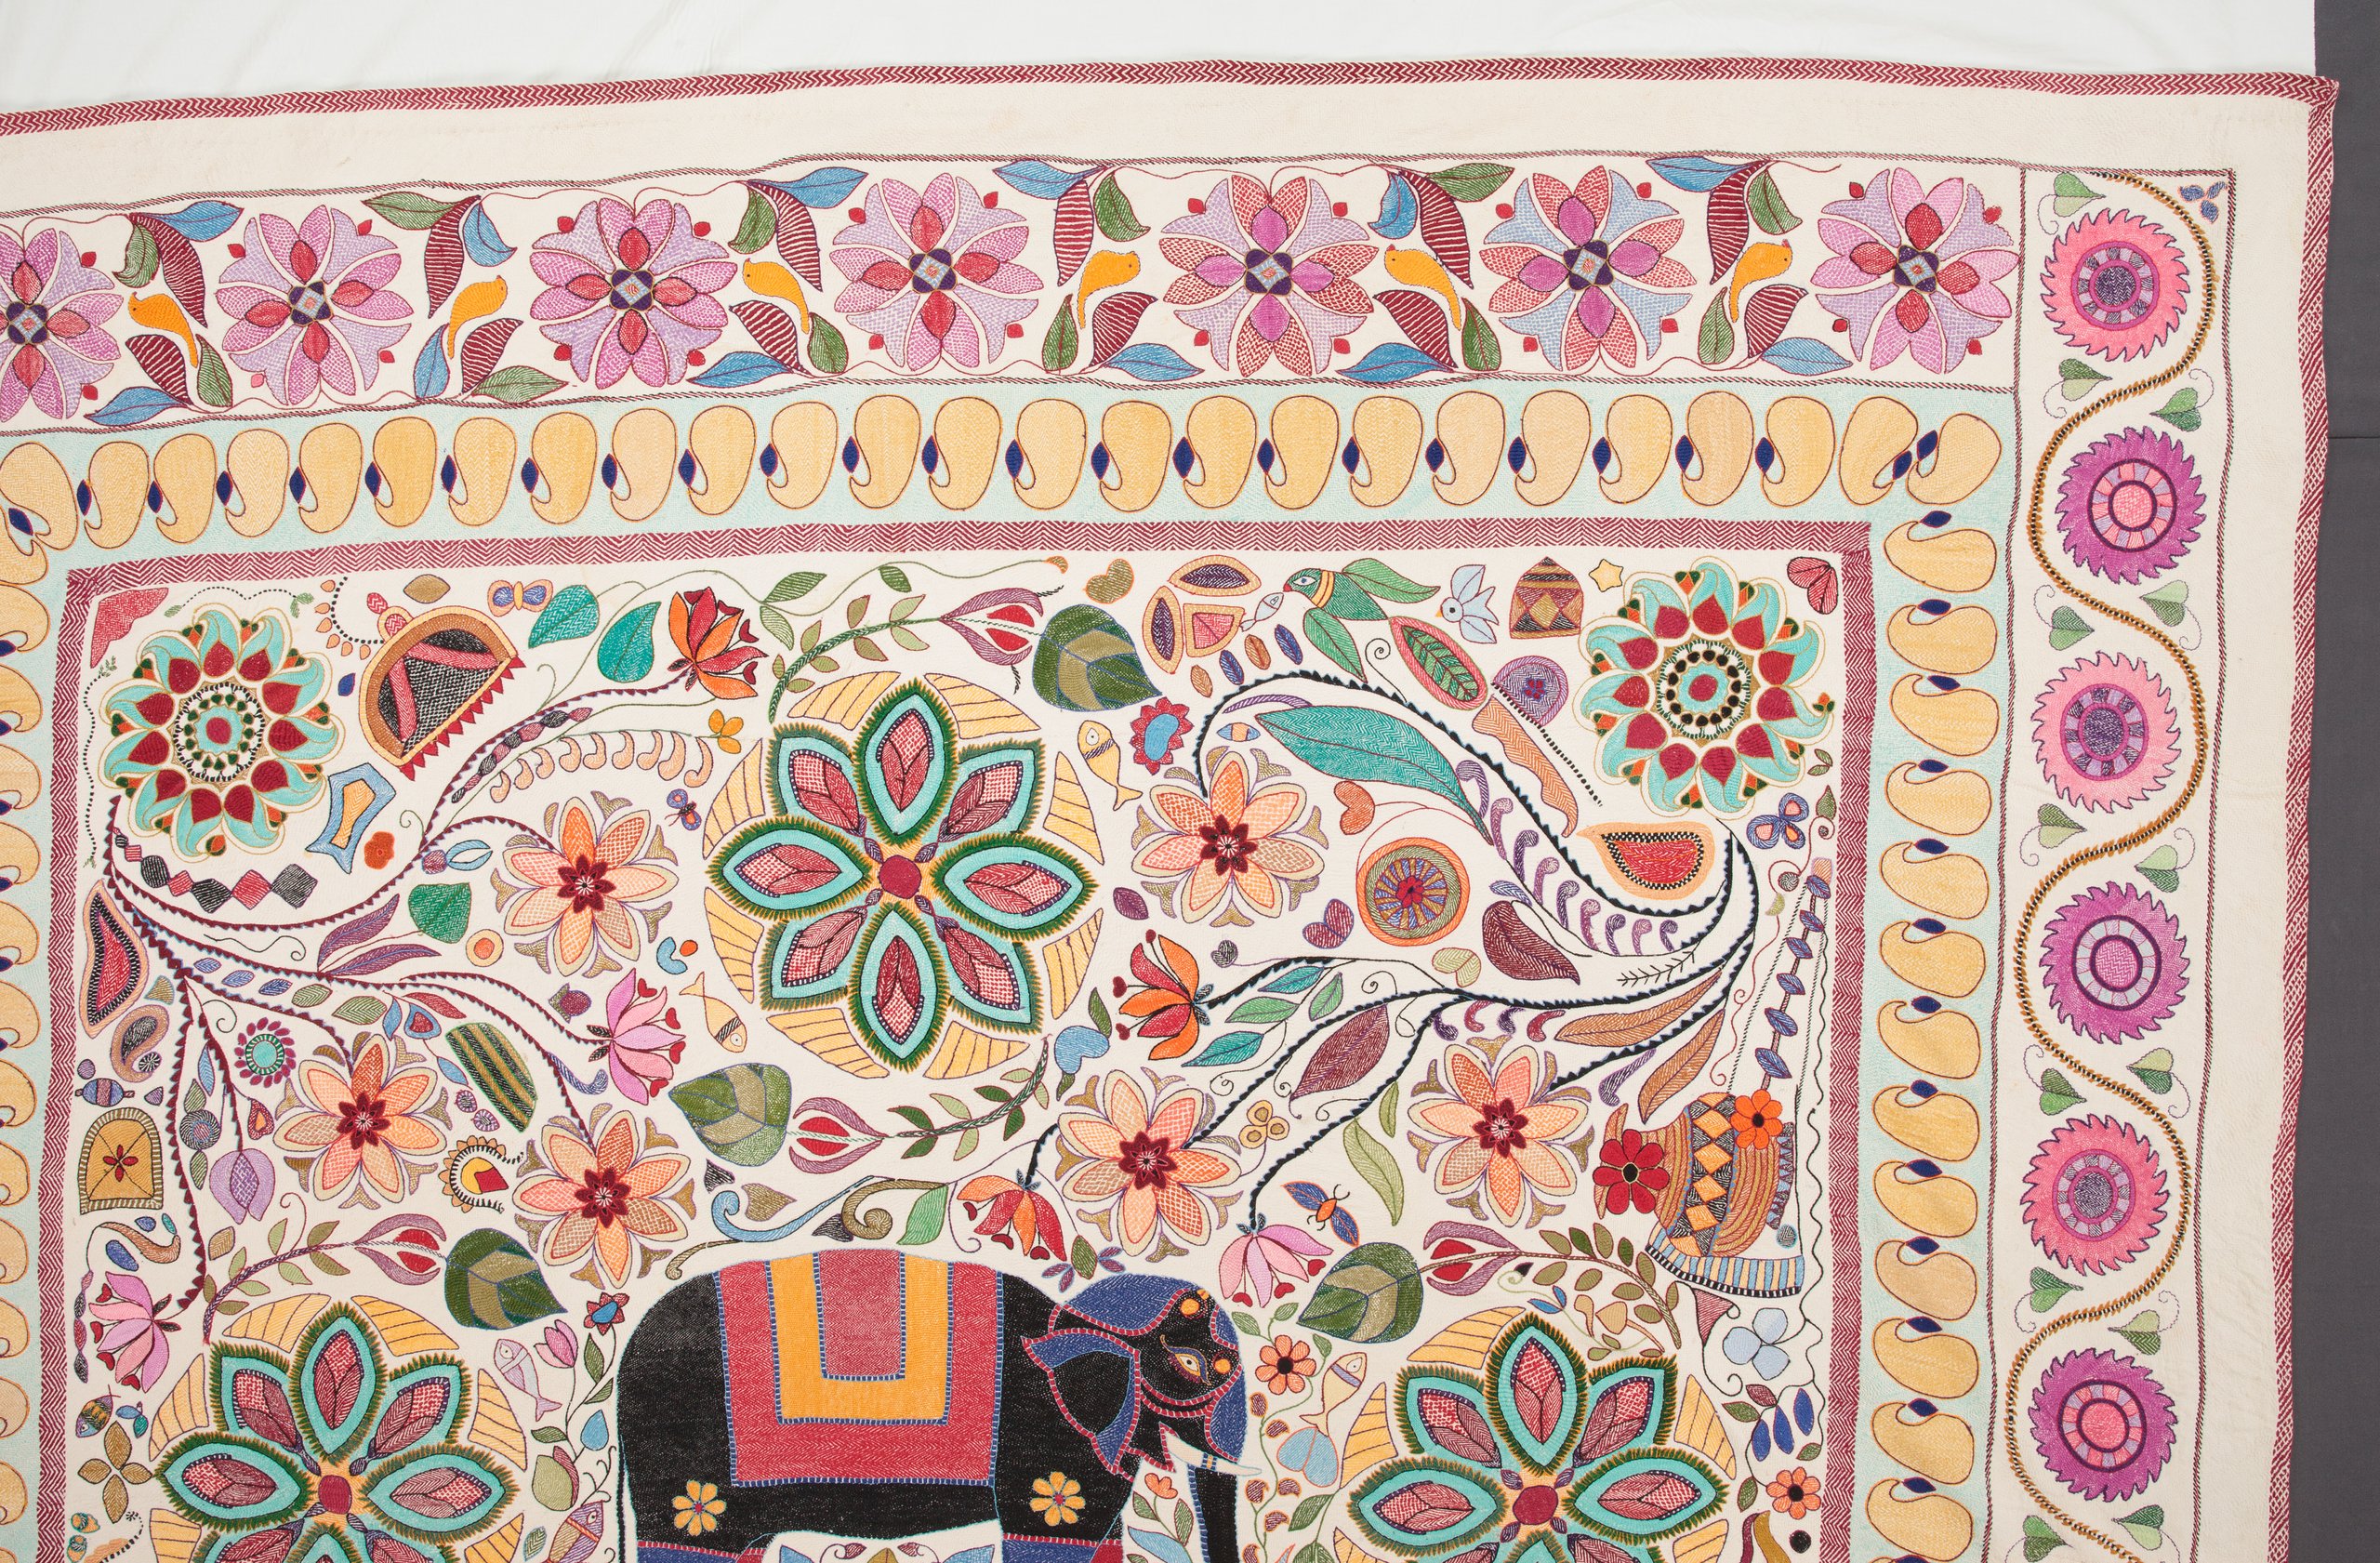 Nakshi kantha or embroidered quilt, Bangladesh